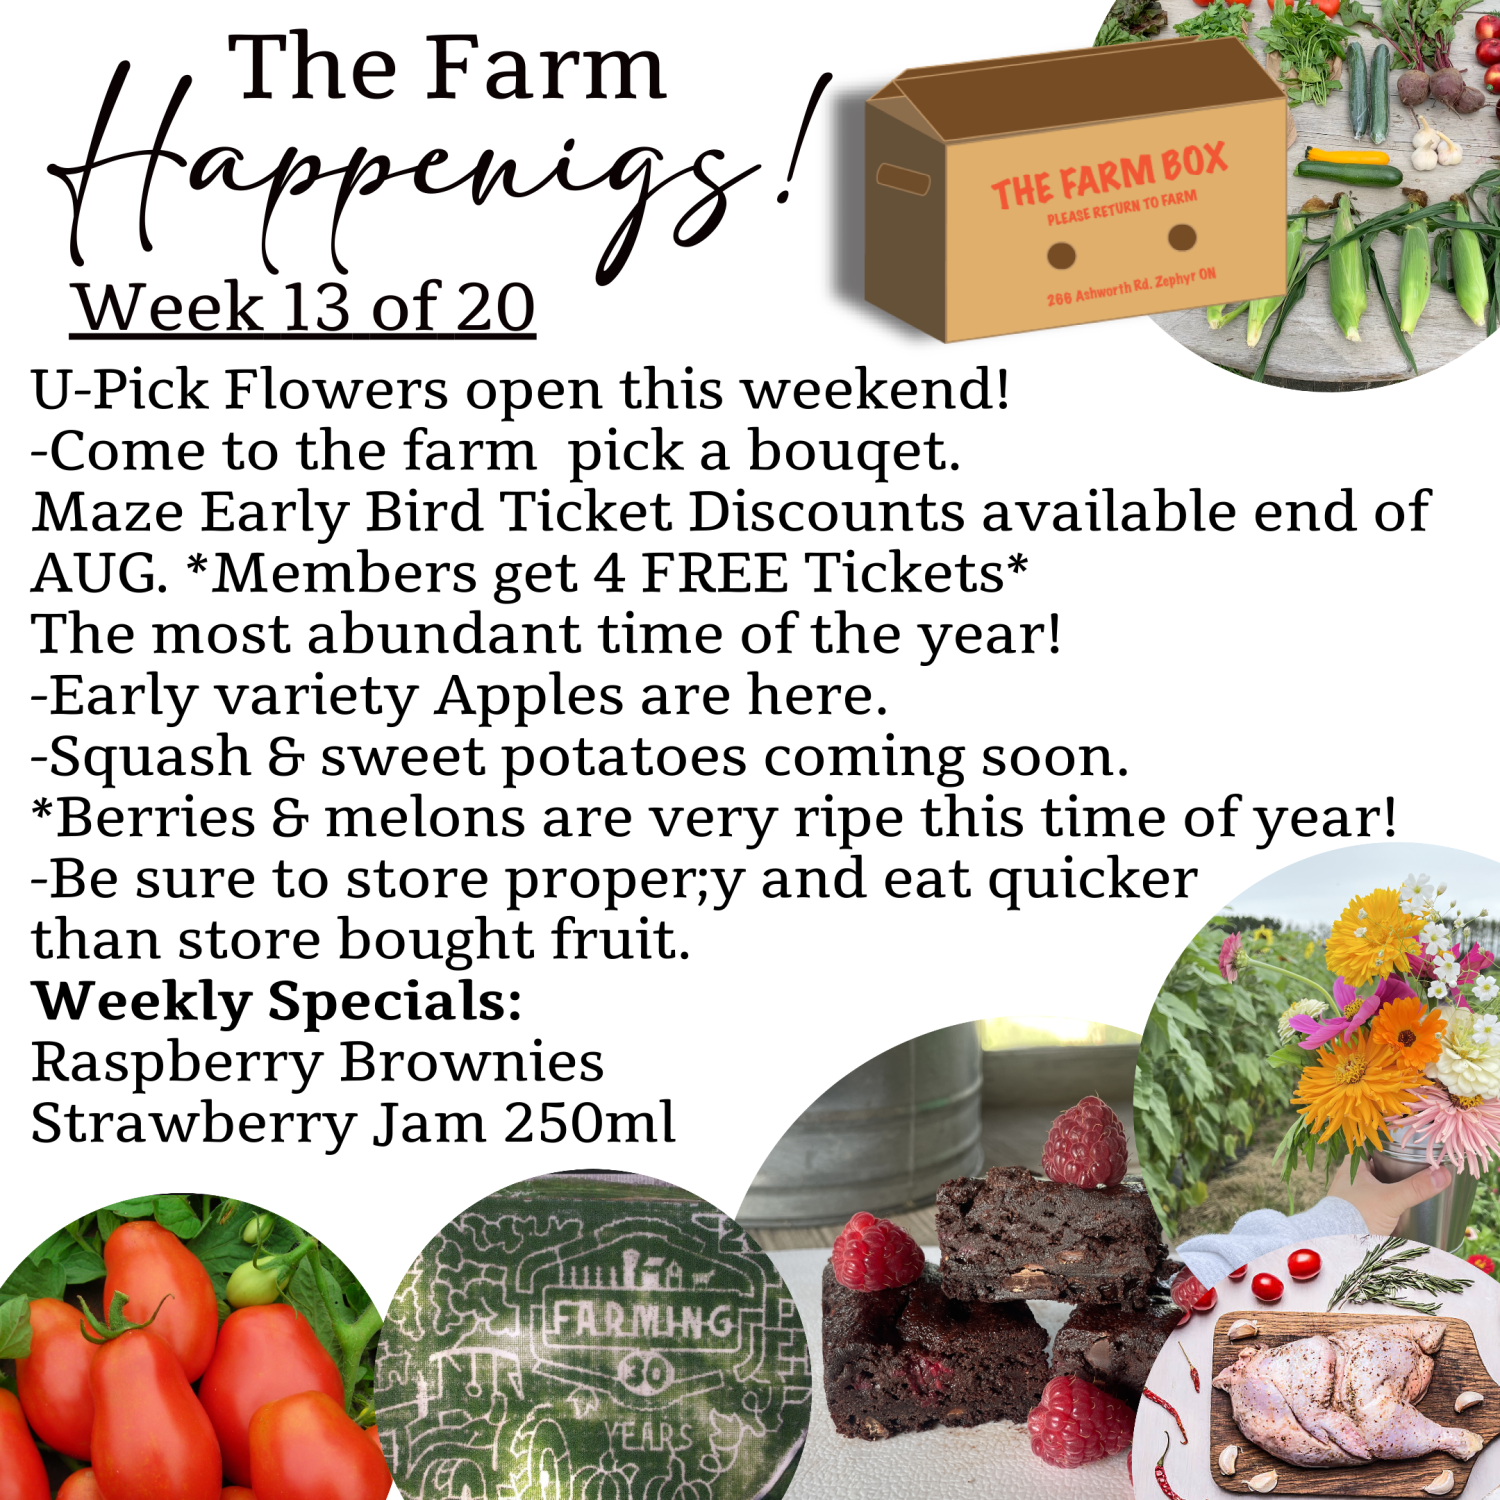 Next Happening: "The Farm Box"-Coopers CSA Farm Farm Happenings Week 13